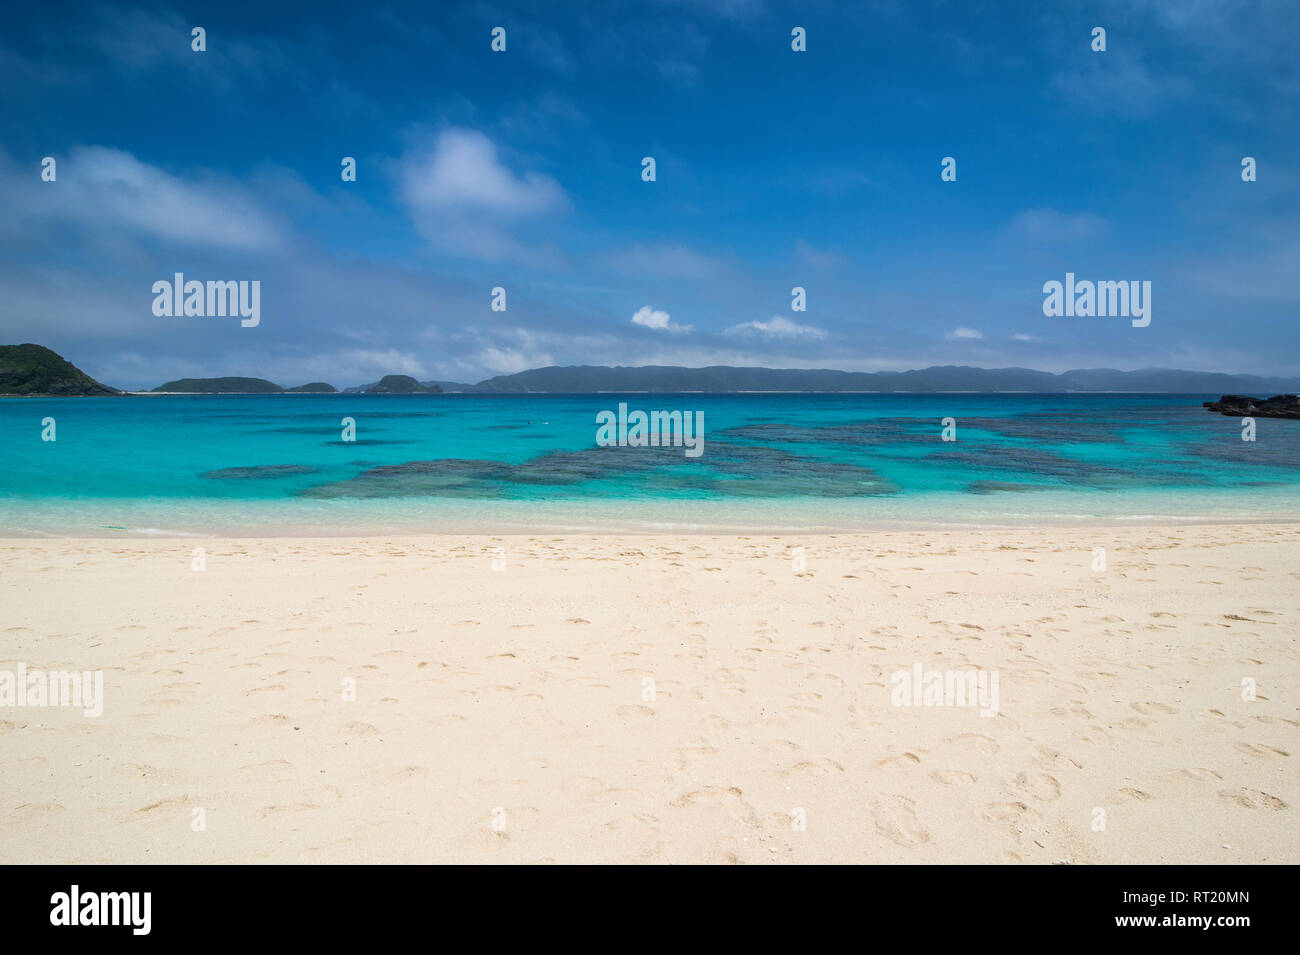 Japan, Okinawa Islands, Kerama Islands, Zamami Island, East China Sea, Furuzamami Beach Stock Photo